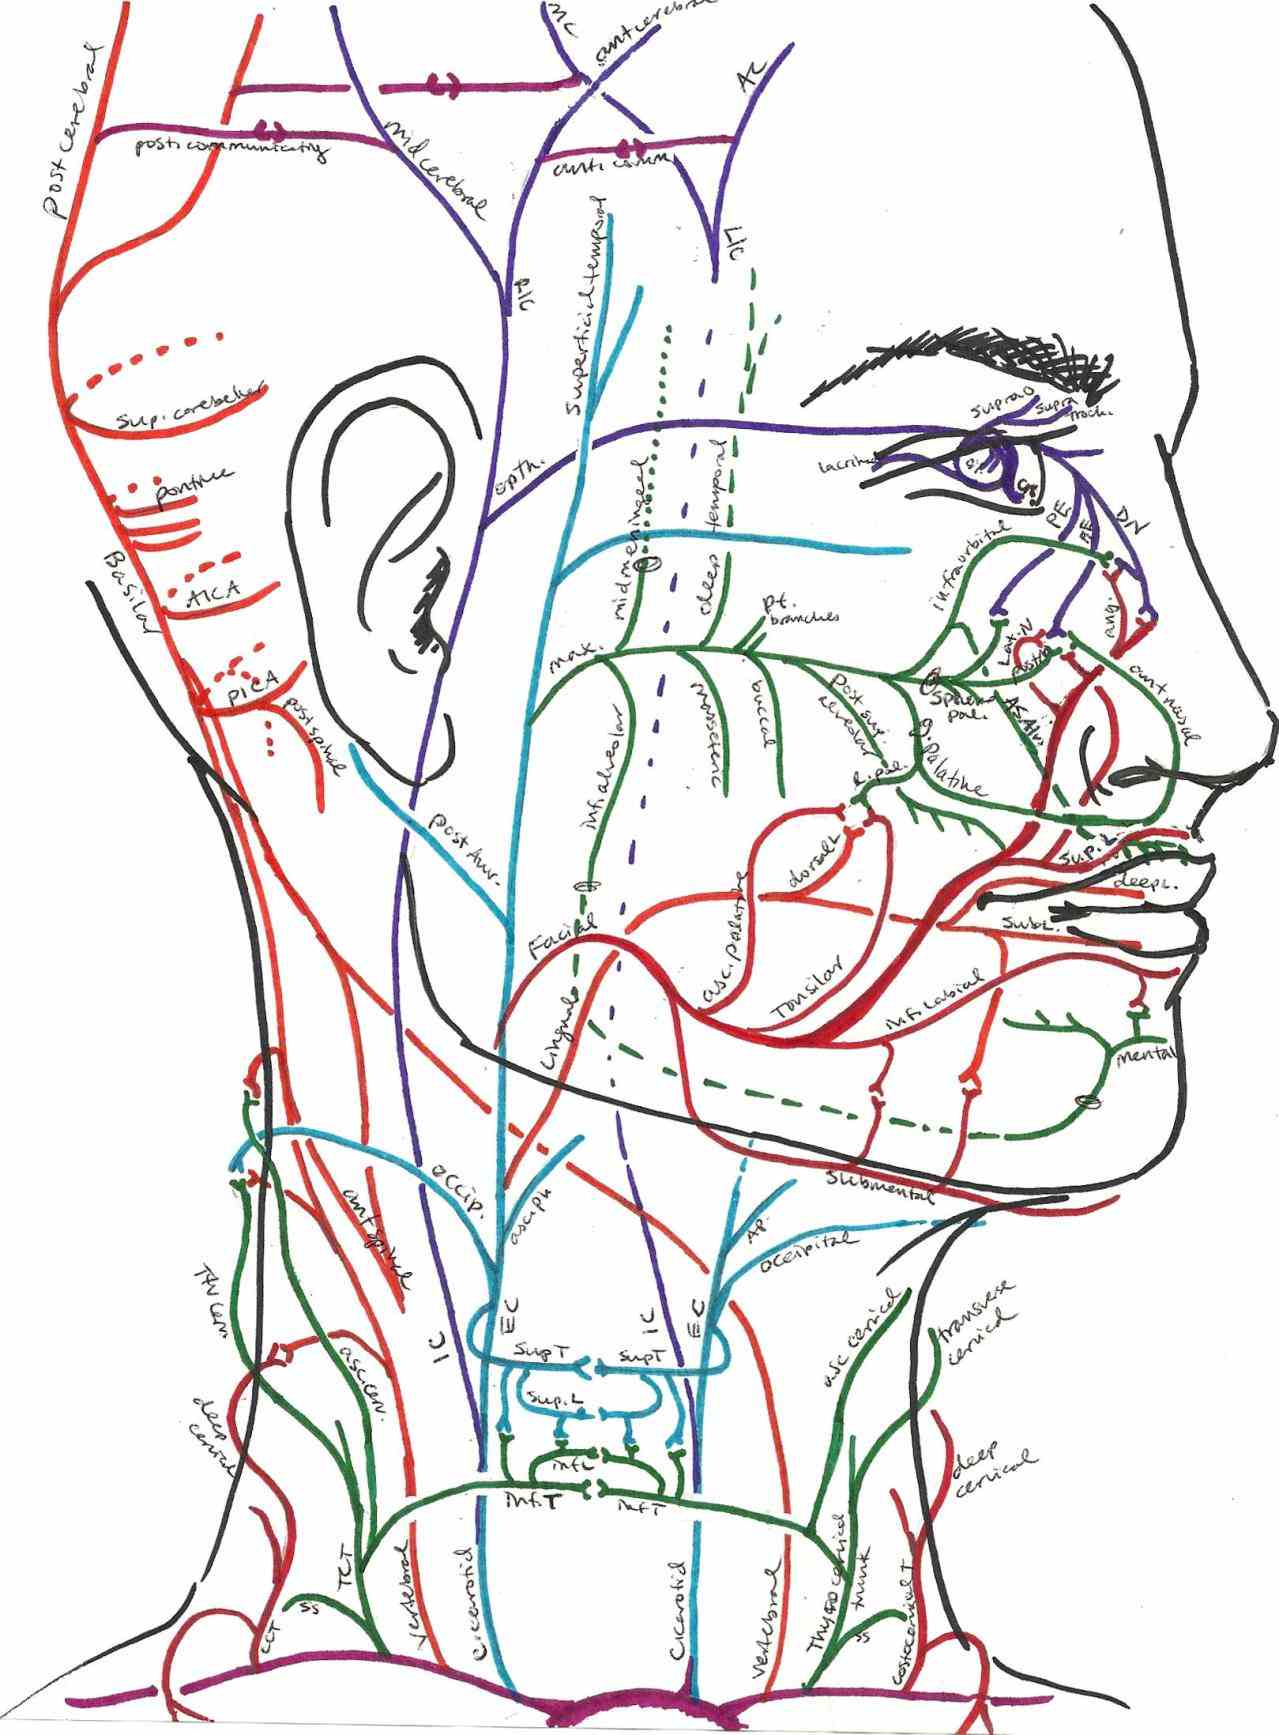 Labeled Illustration Head And Neck Diagram | MedicineBTG.com